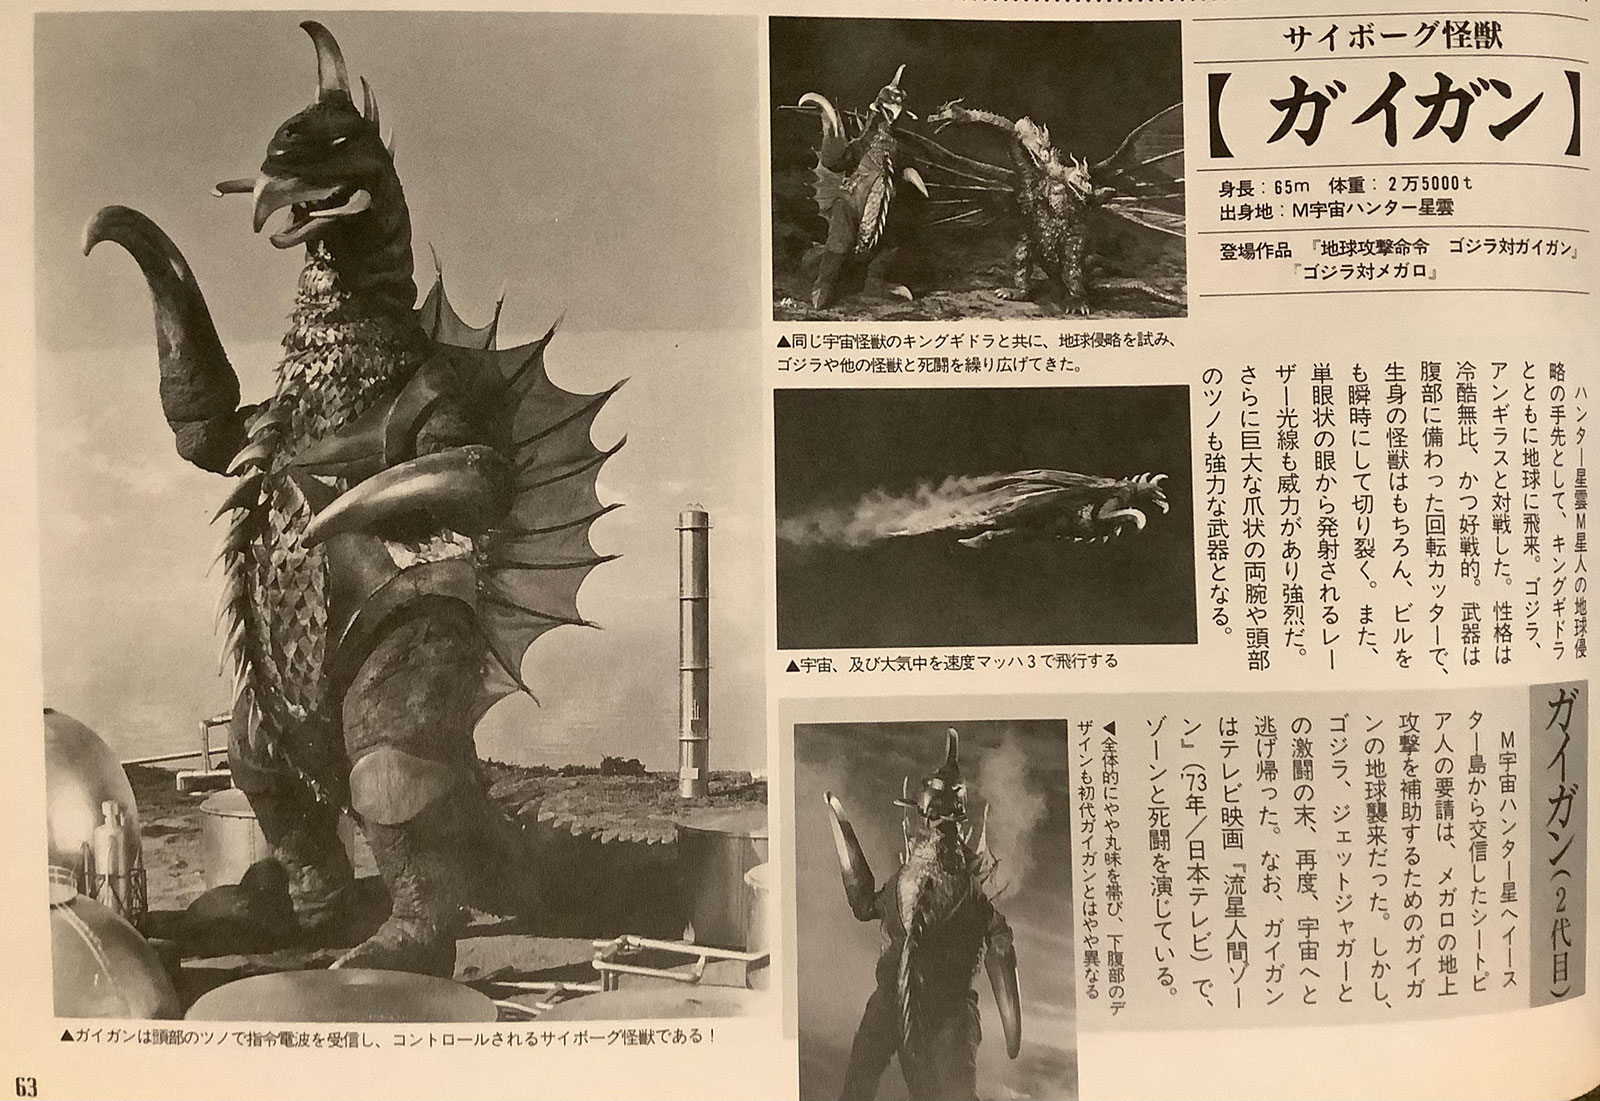 About Cyborg Monster Gigan – MyKaiju®